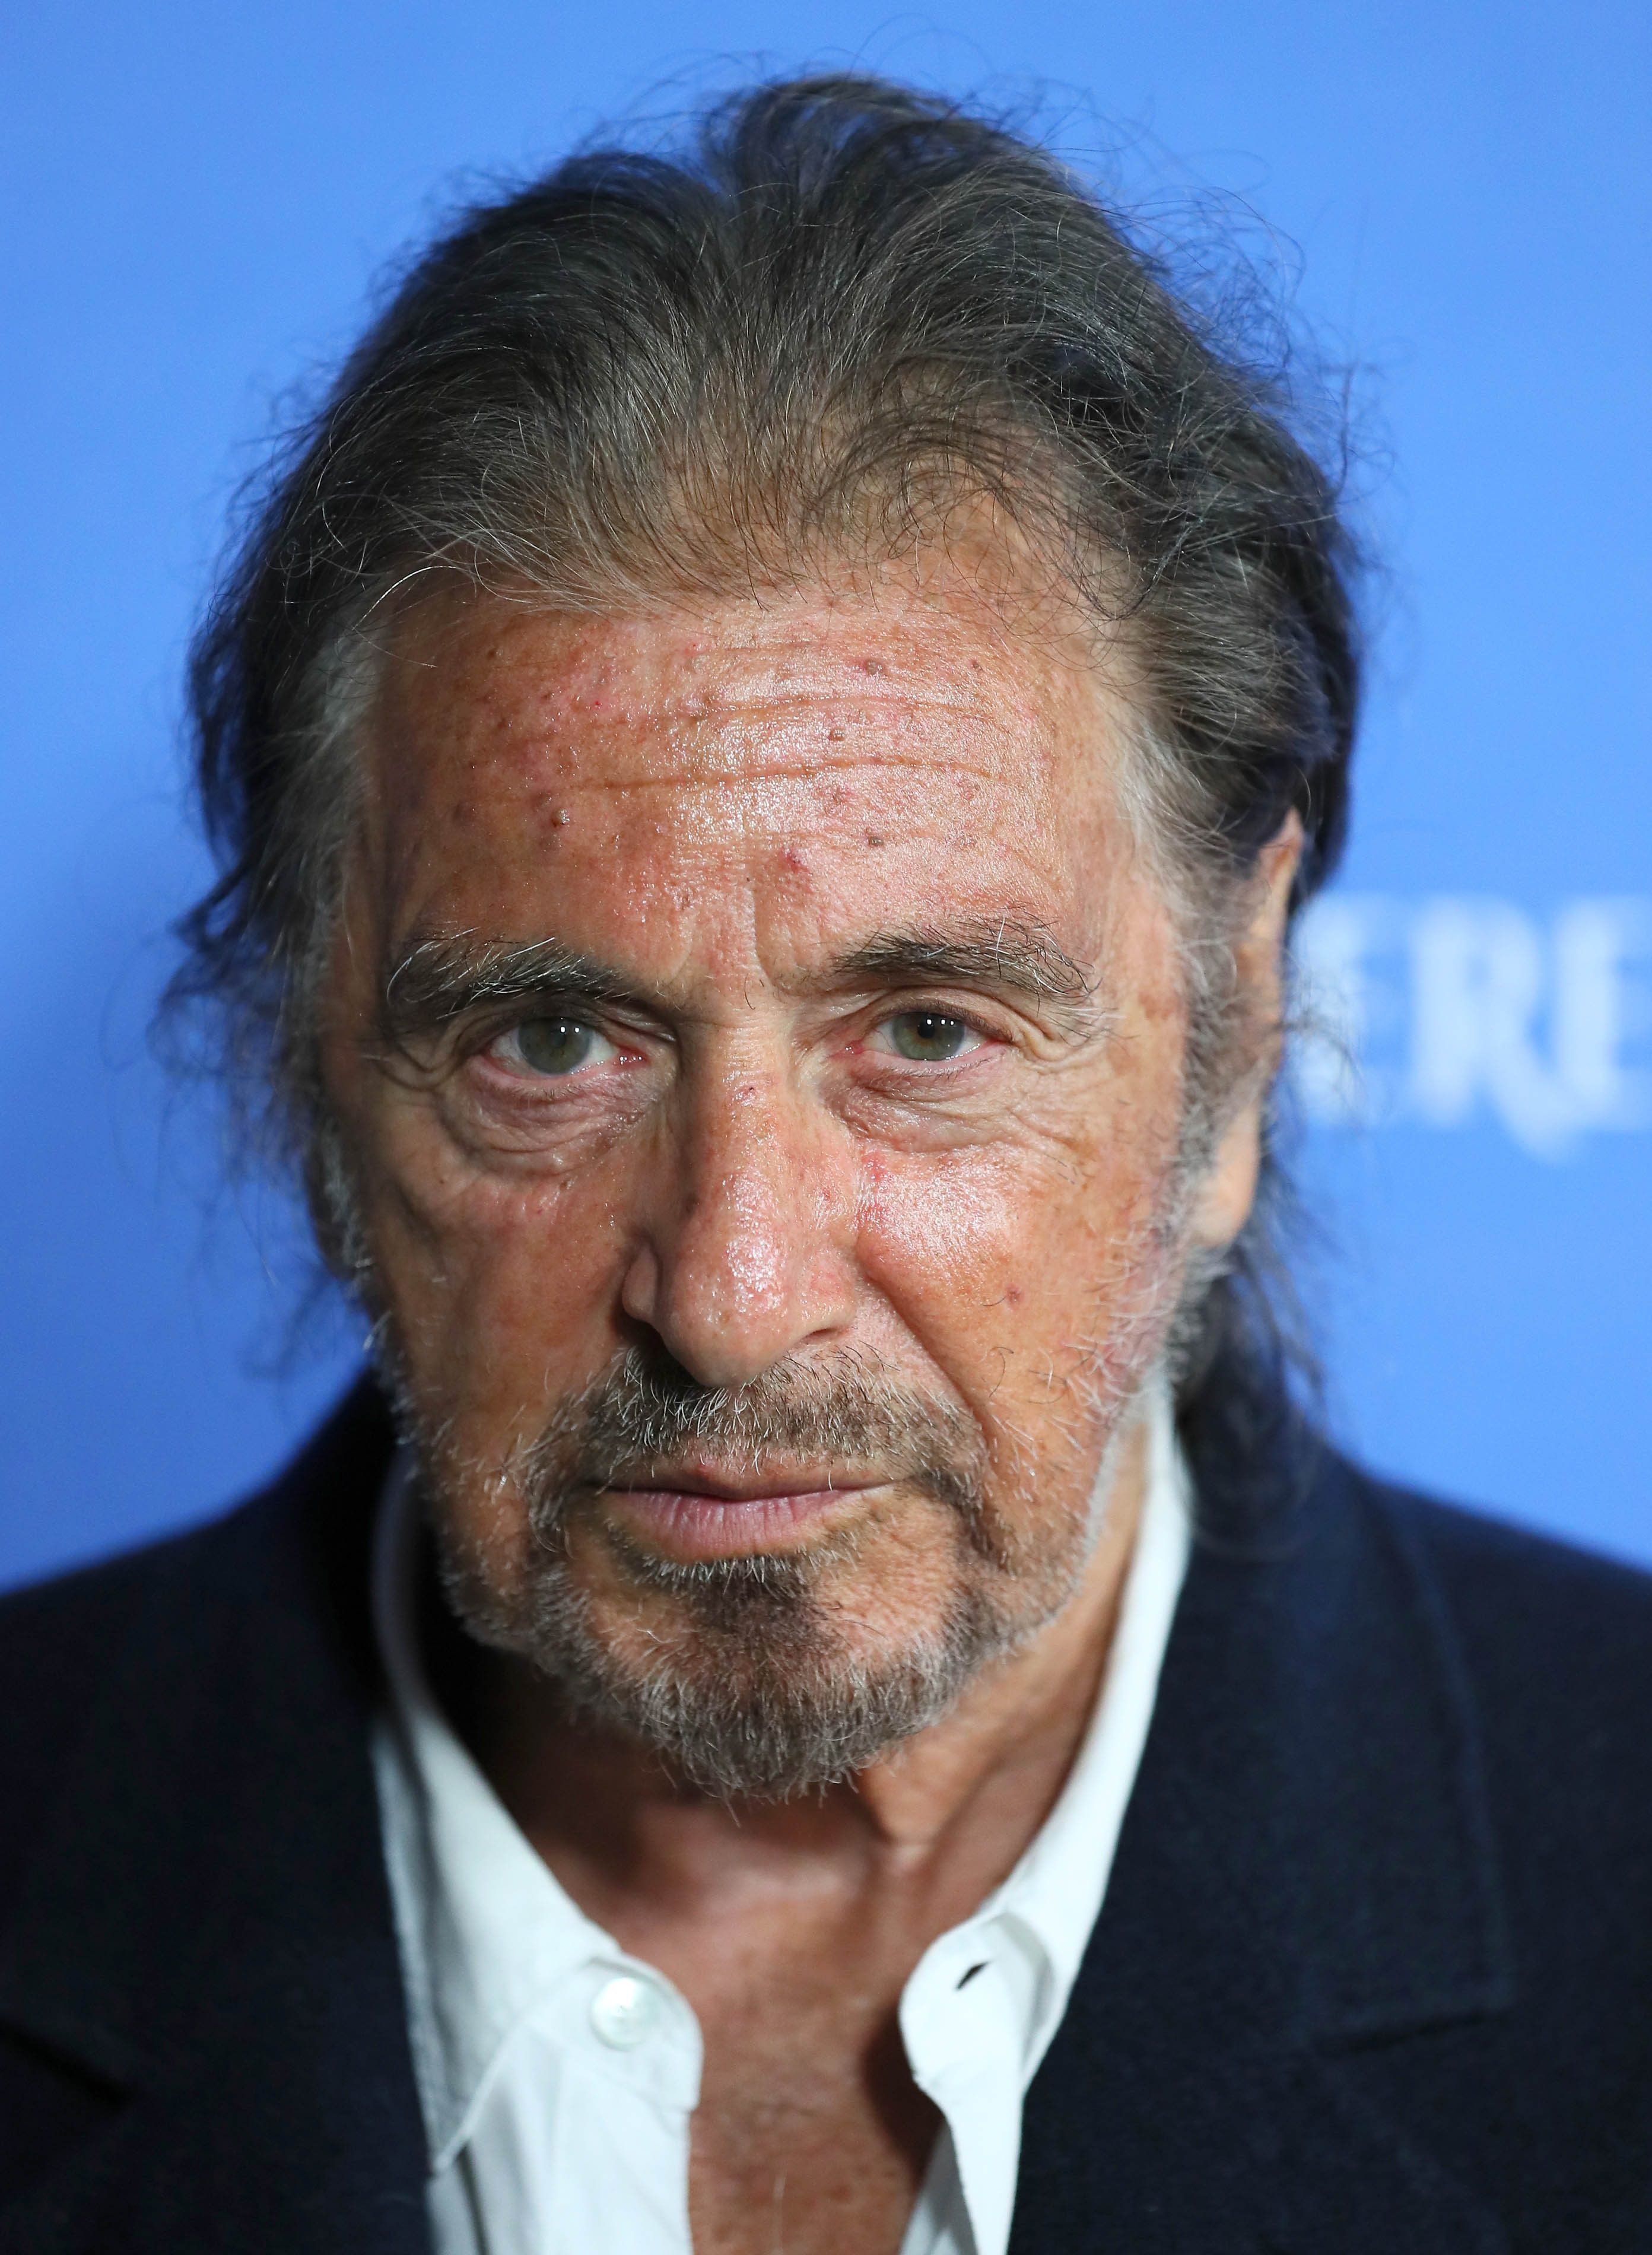 Al Pacino at the 14th Annual Santa Barbara International Film Festival in 2019 | Source: Getty Images